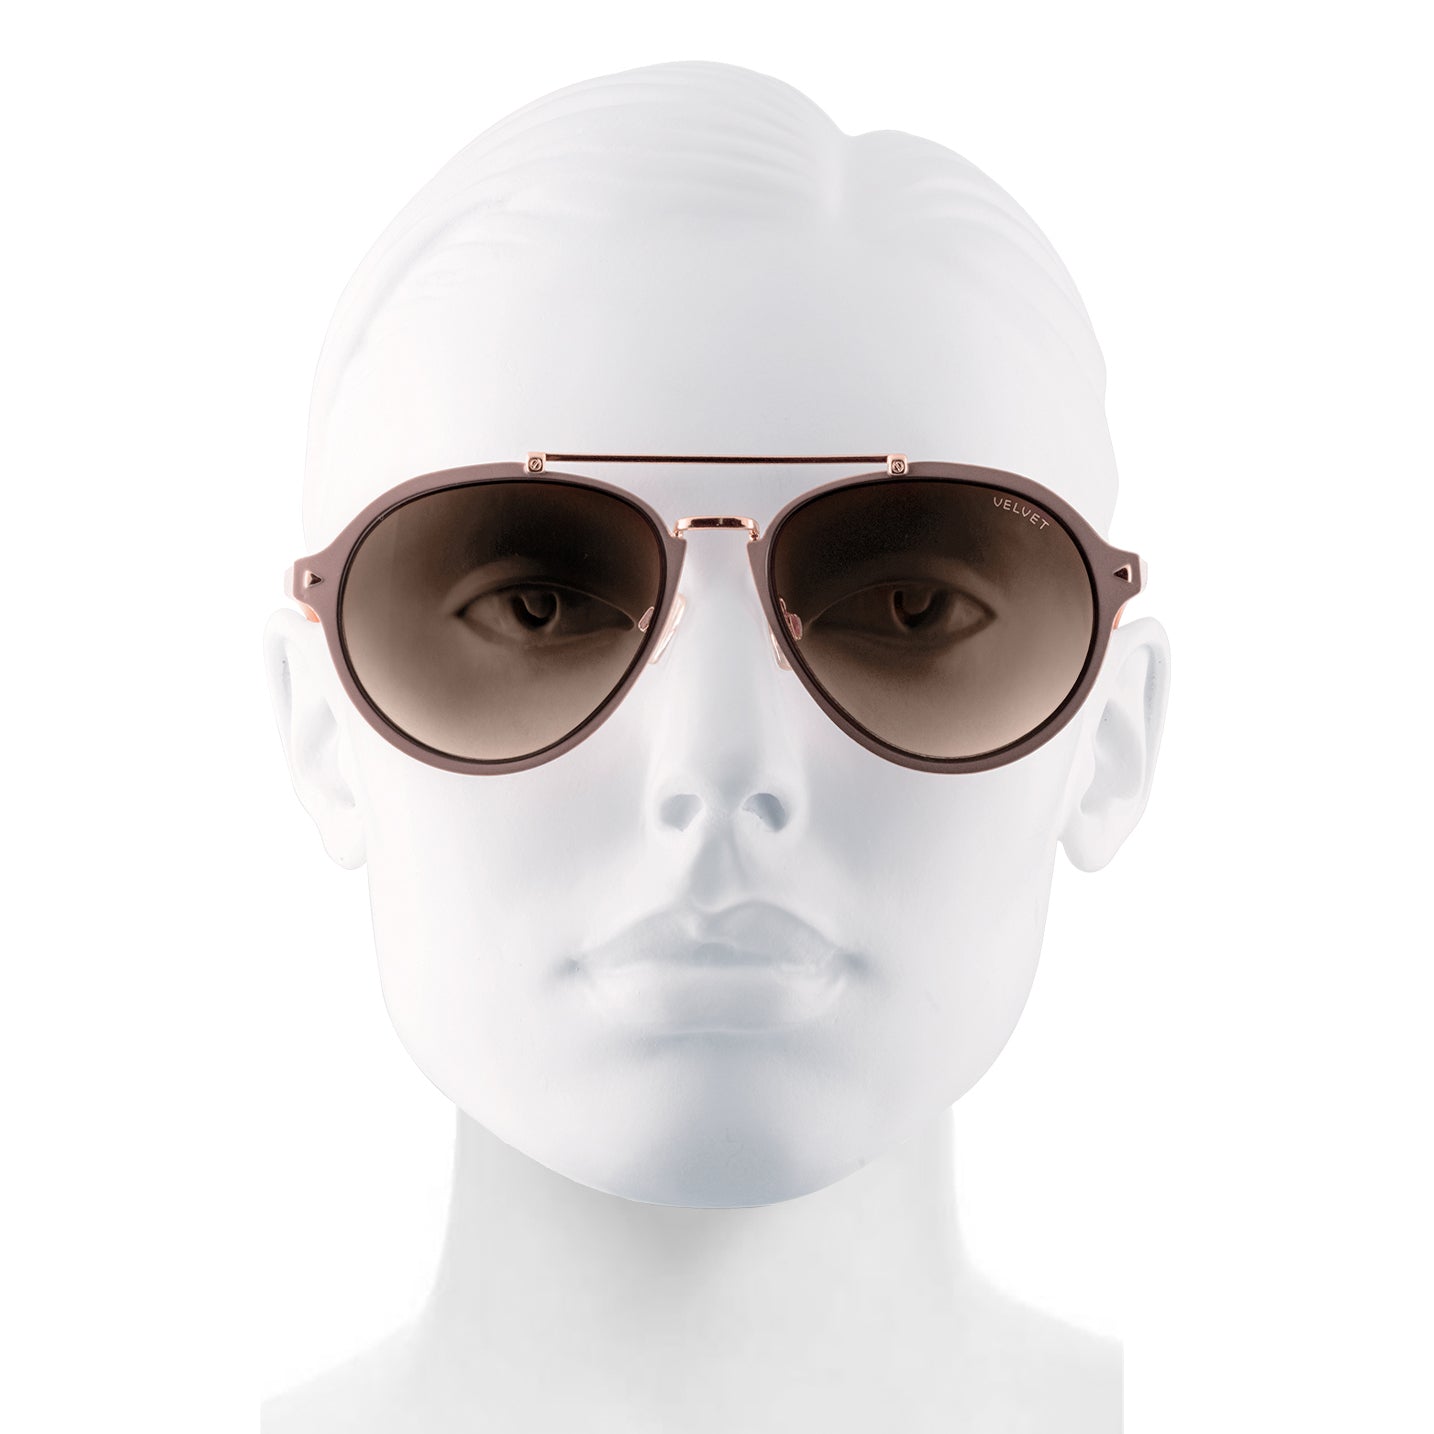 Oval Face Shape Style Box Sunglasses Velvet Eyewear   